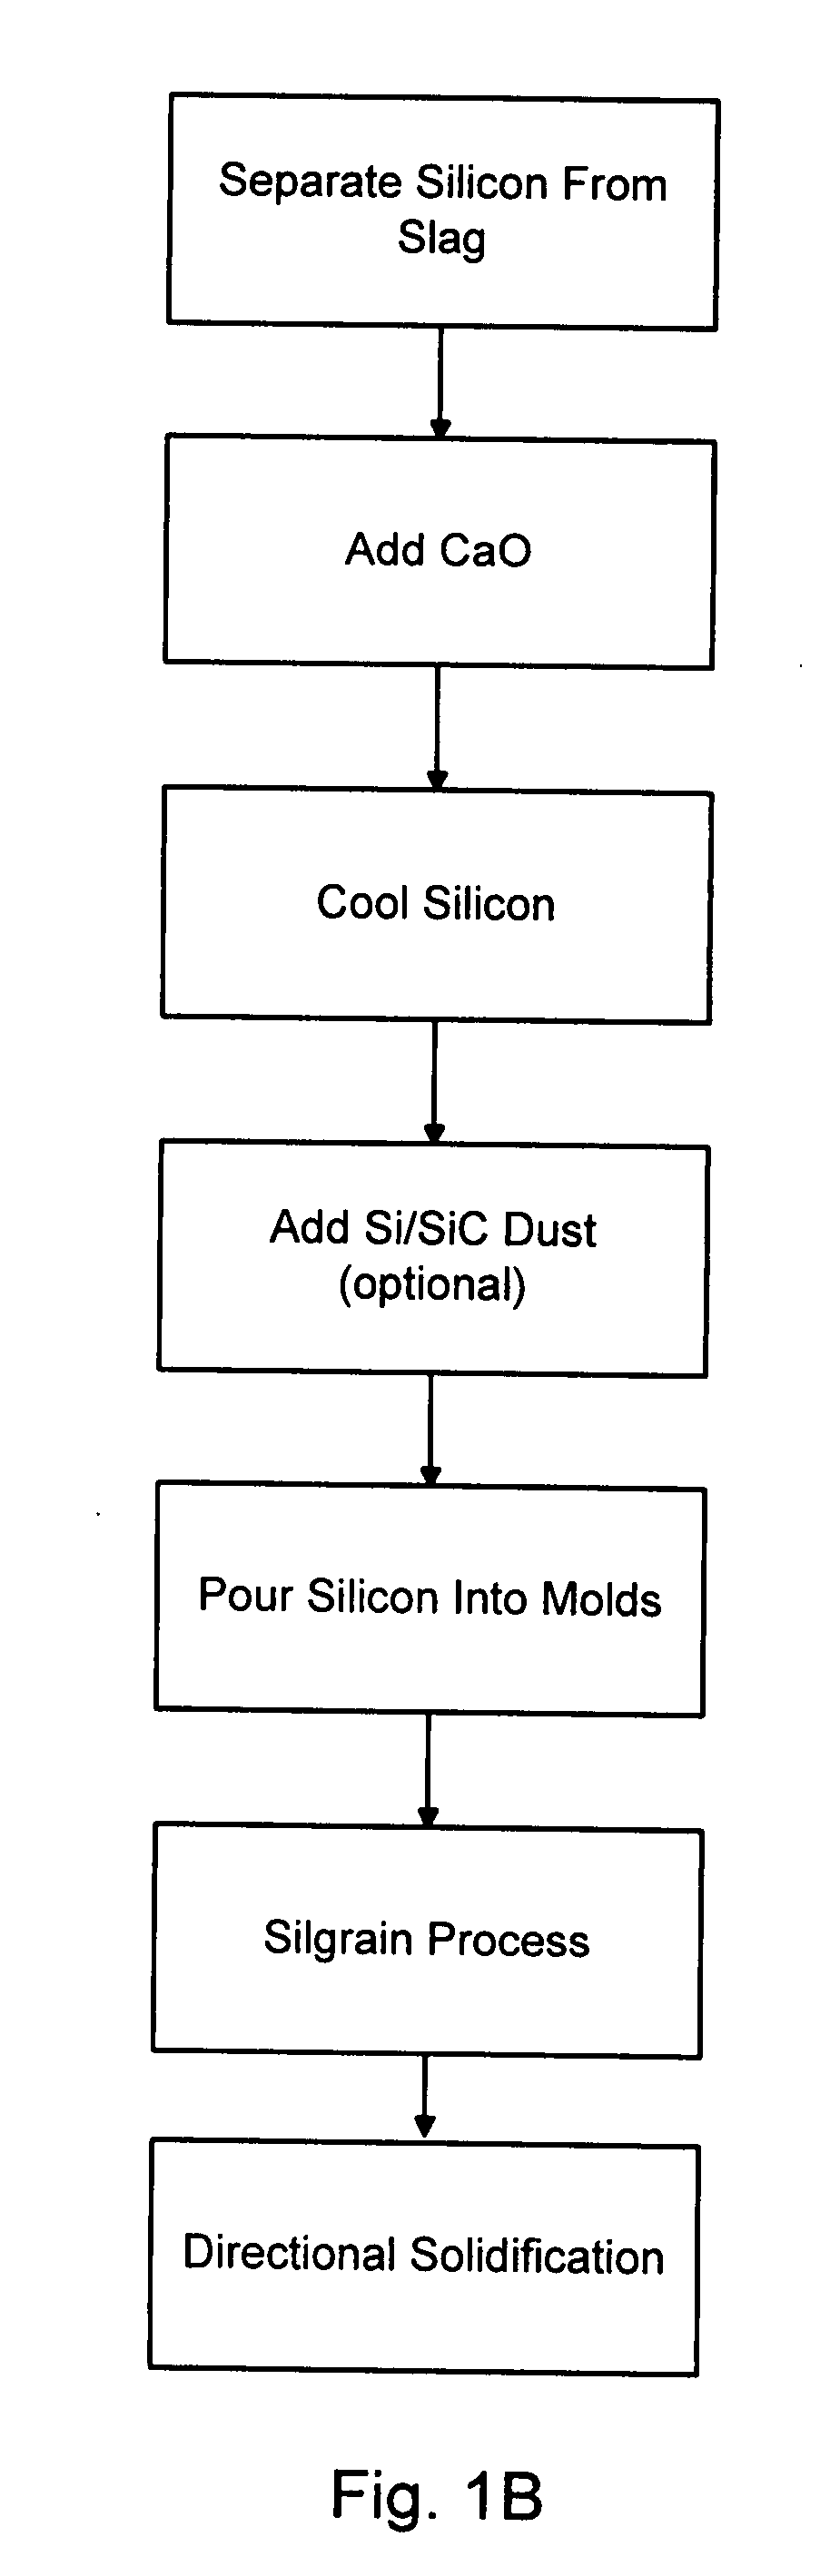 Silicon refining process